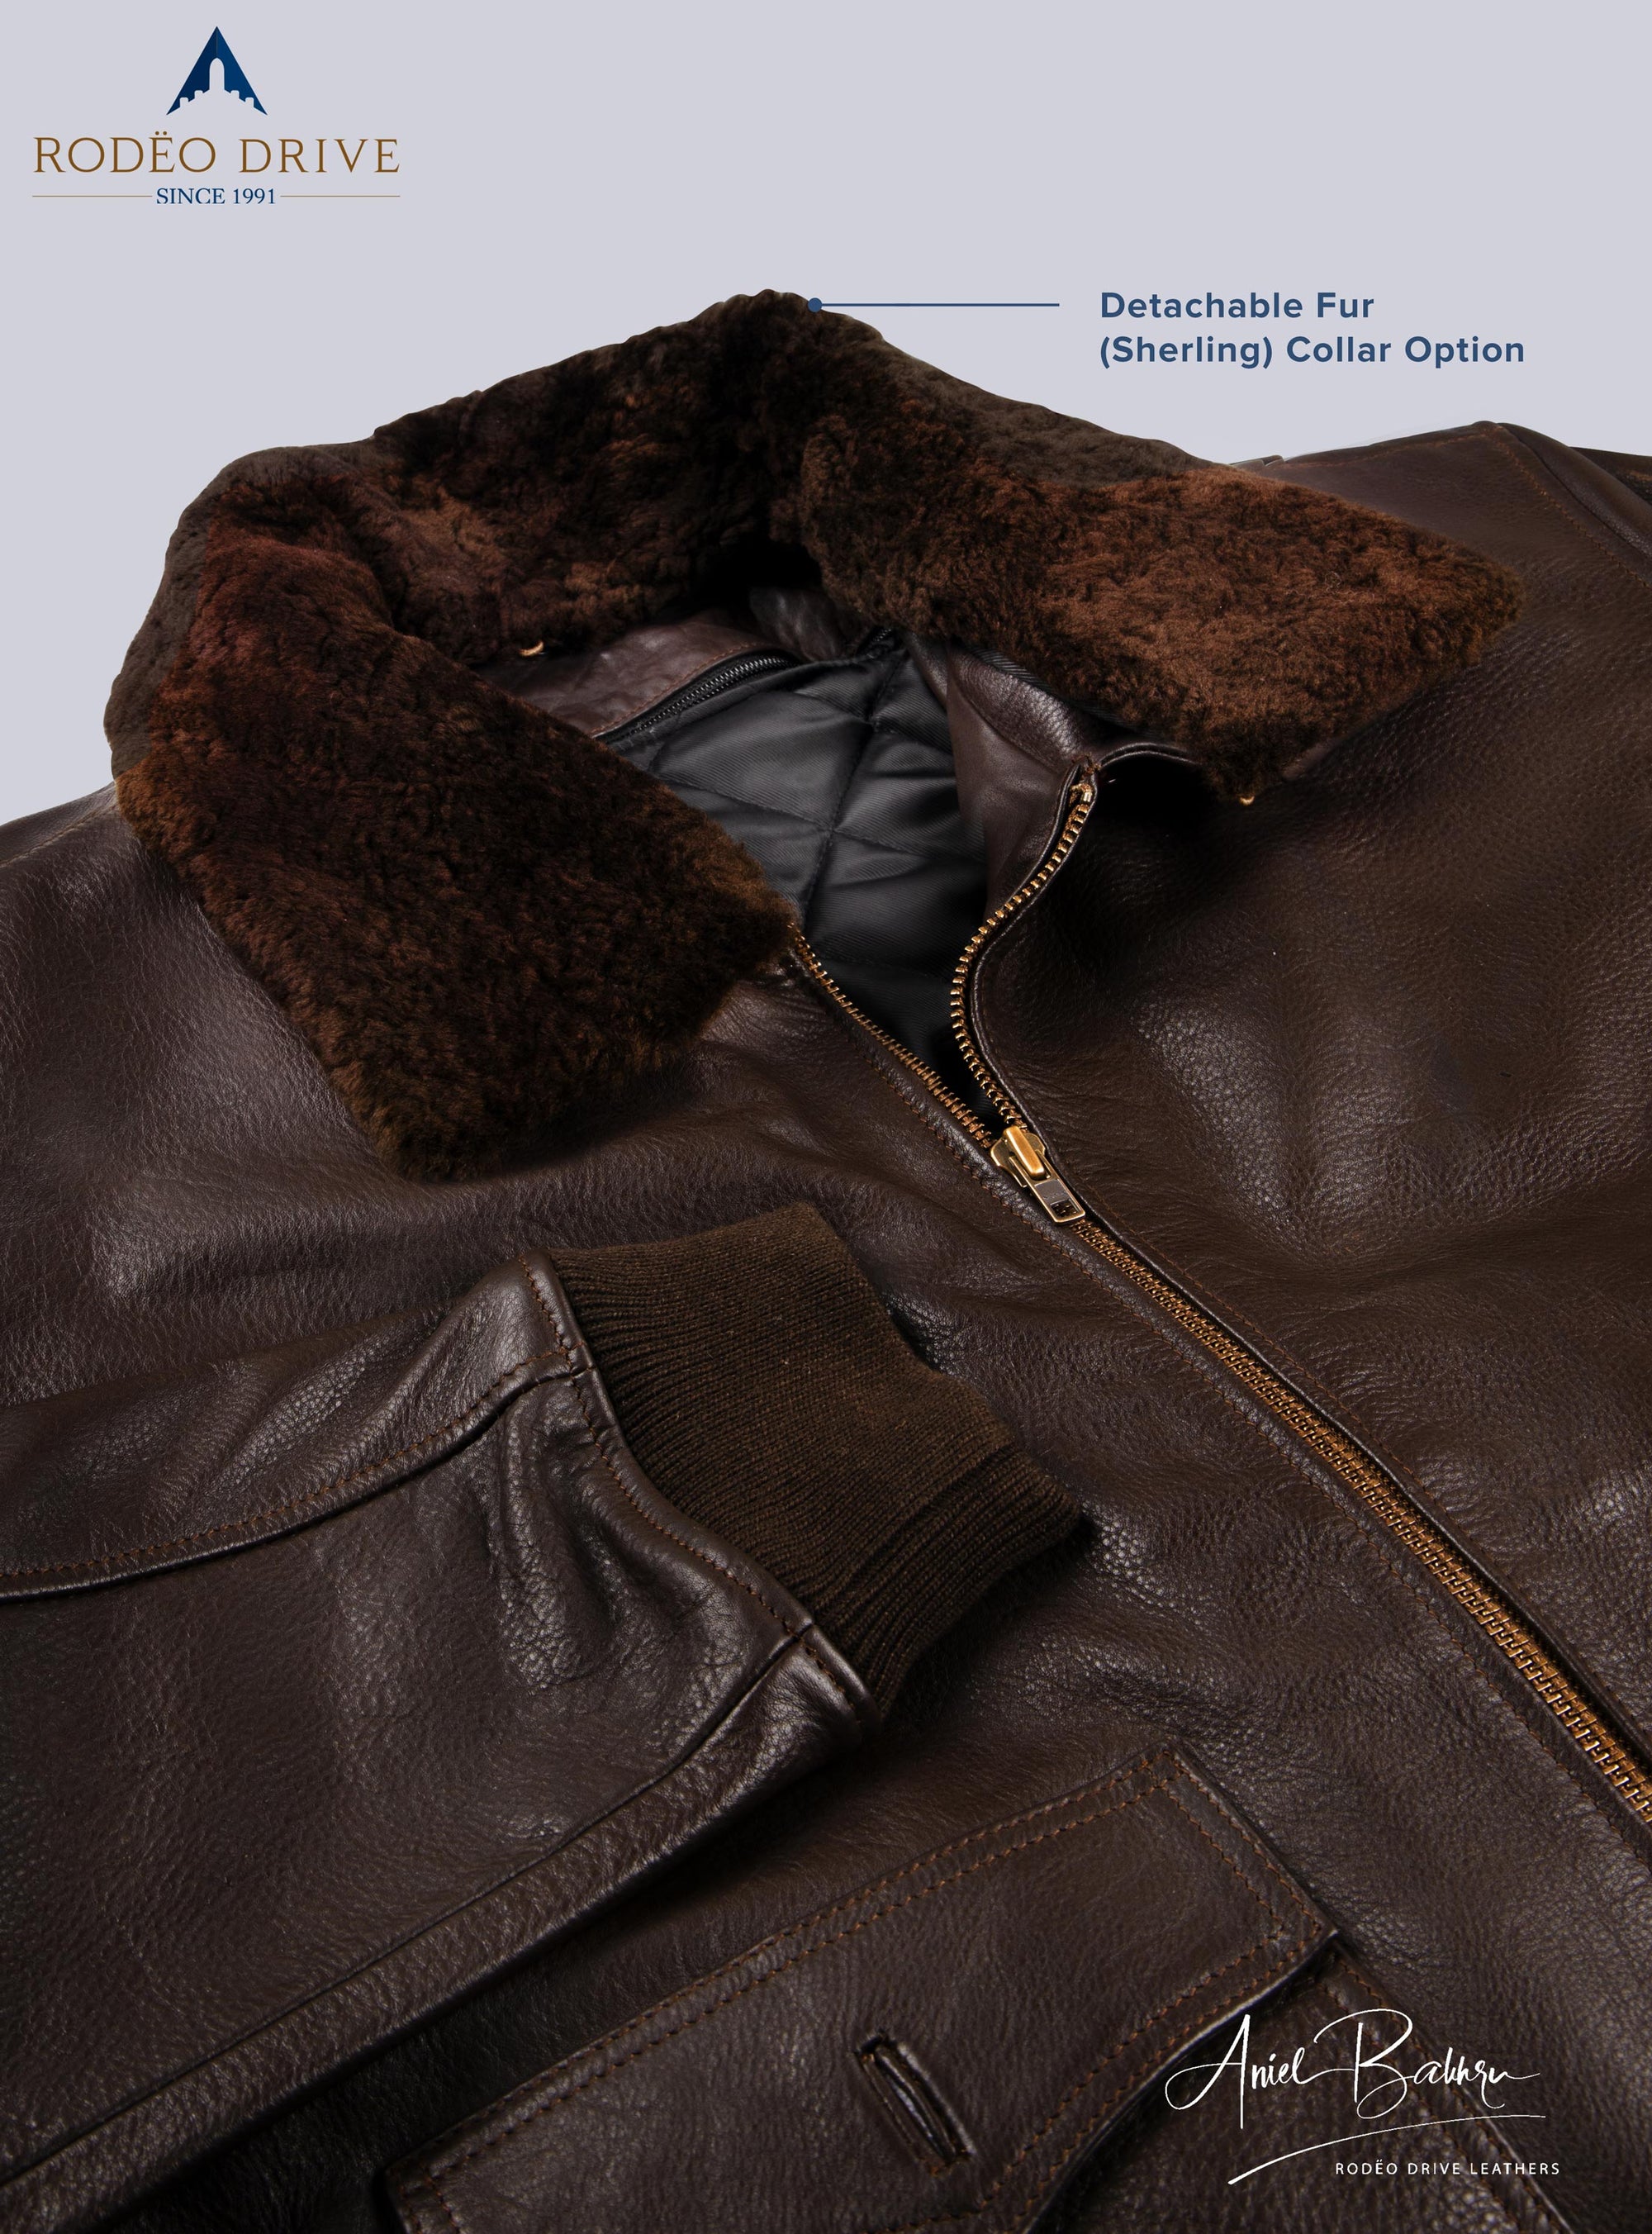 detachable fur of B2 bomber jacket collar option.